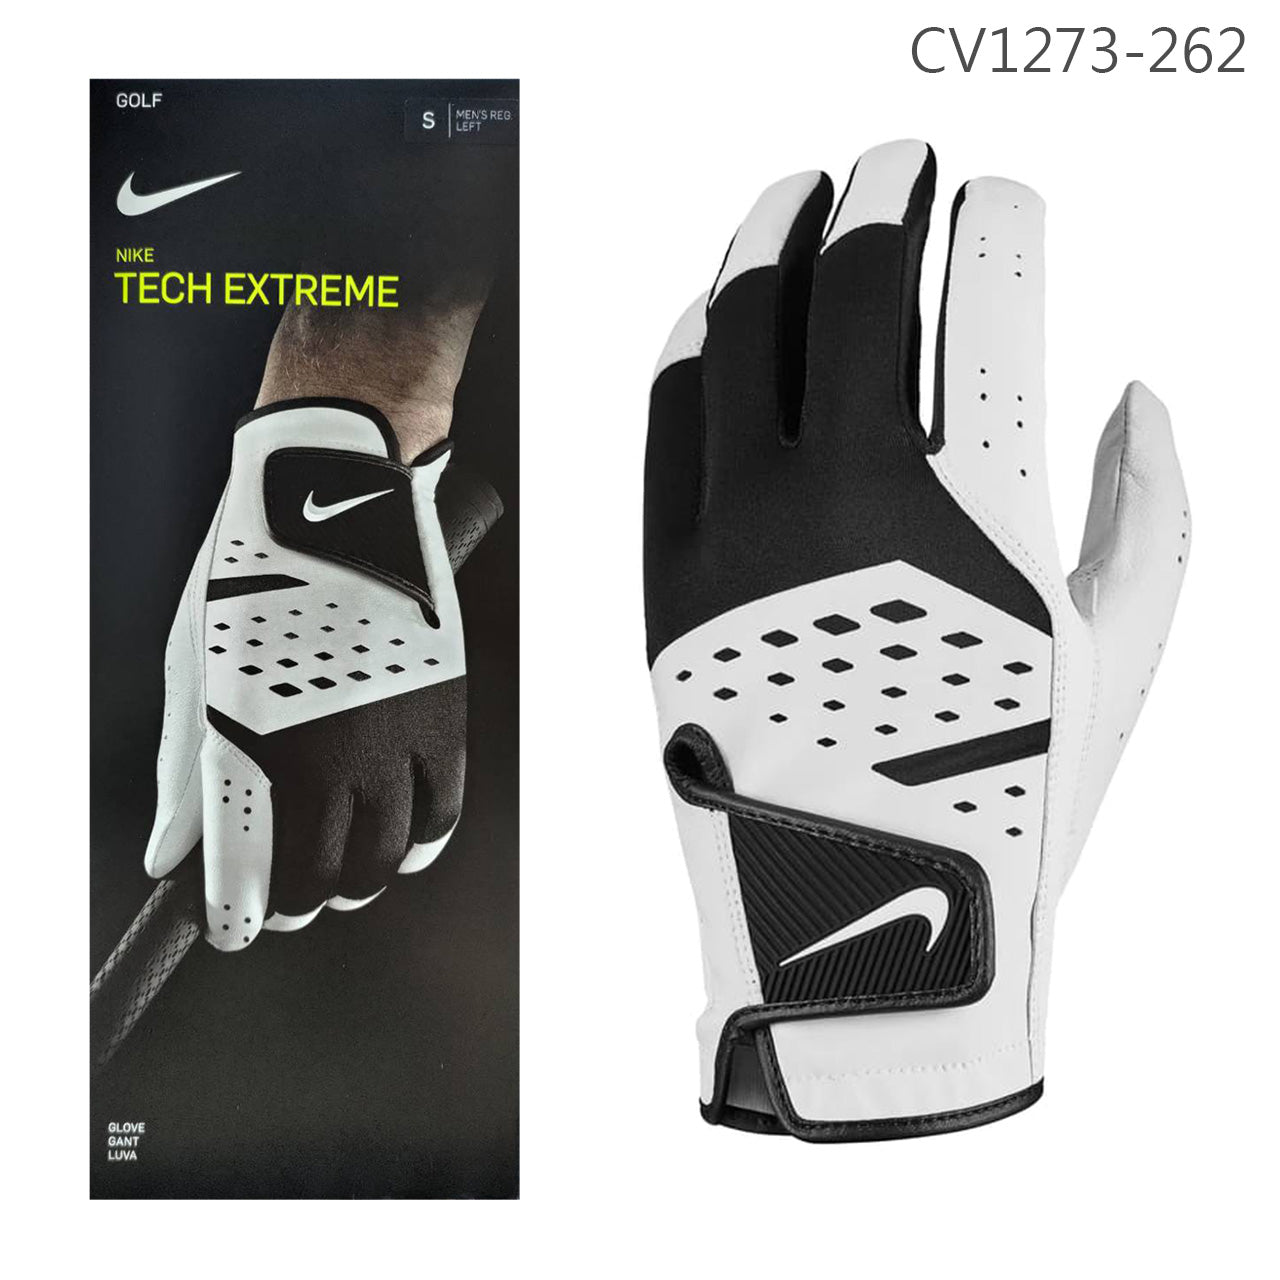 Nike Tech Extreme Golf Gloves